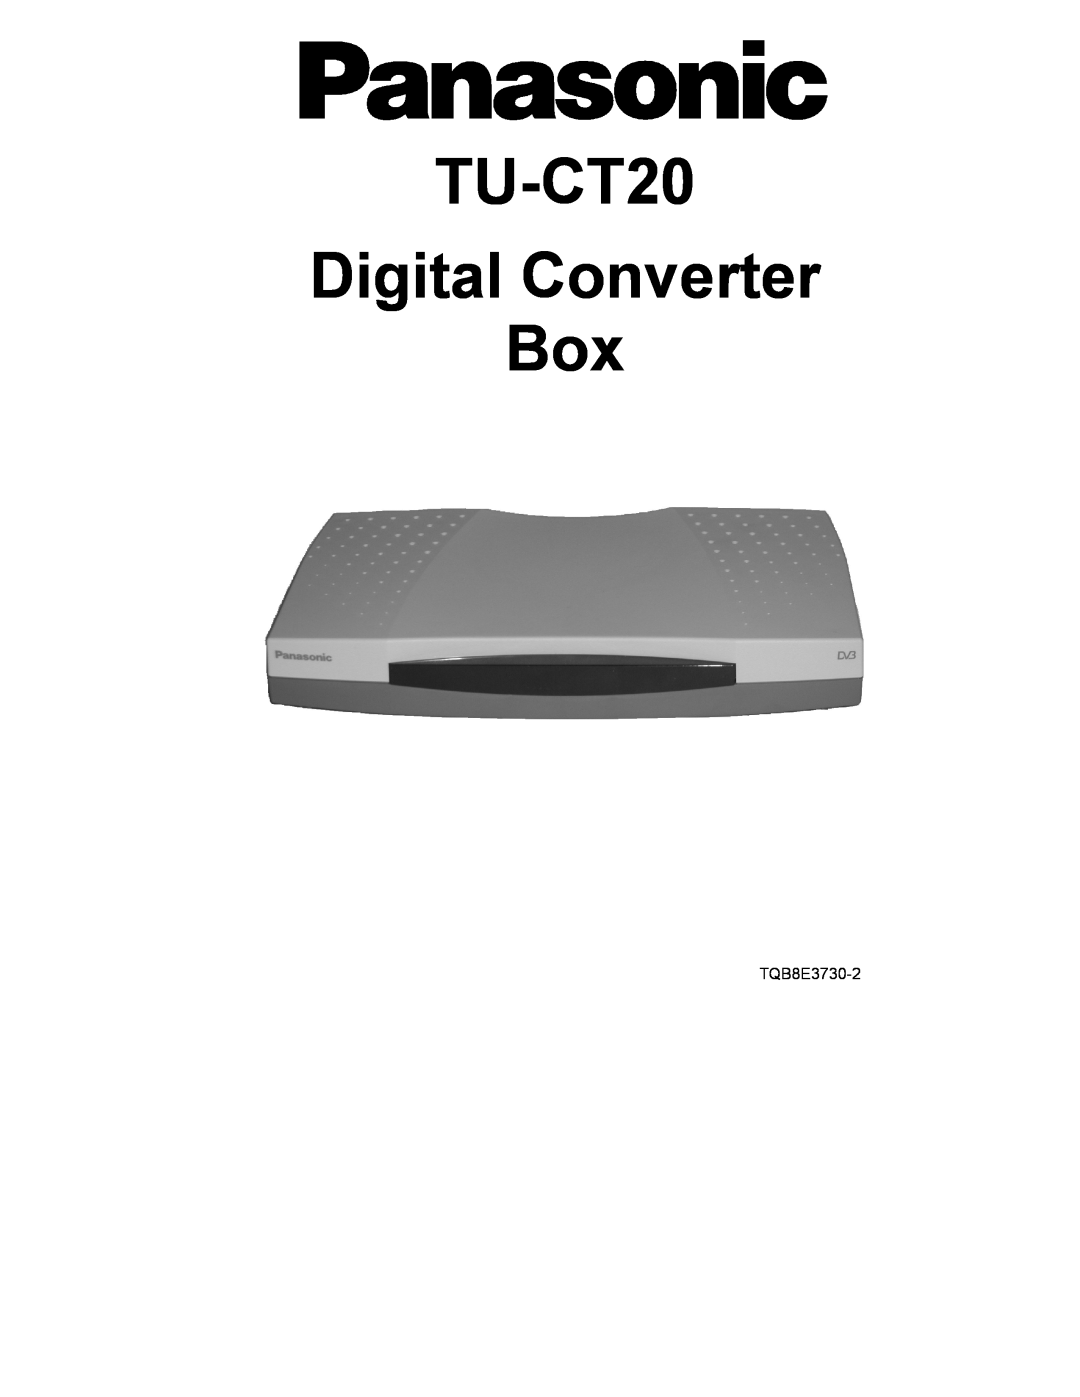 Philips manual TU-CT20 Digital Converter Box, TQB8E3730-2 